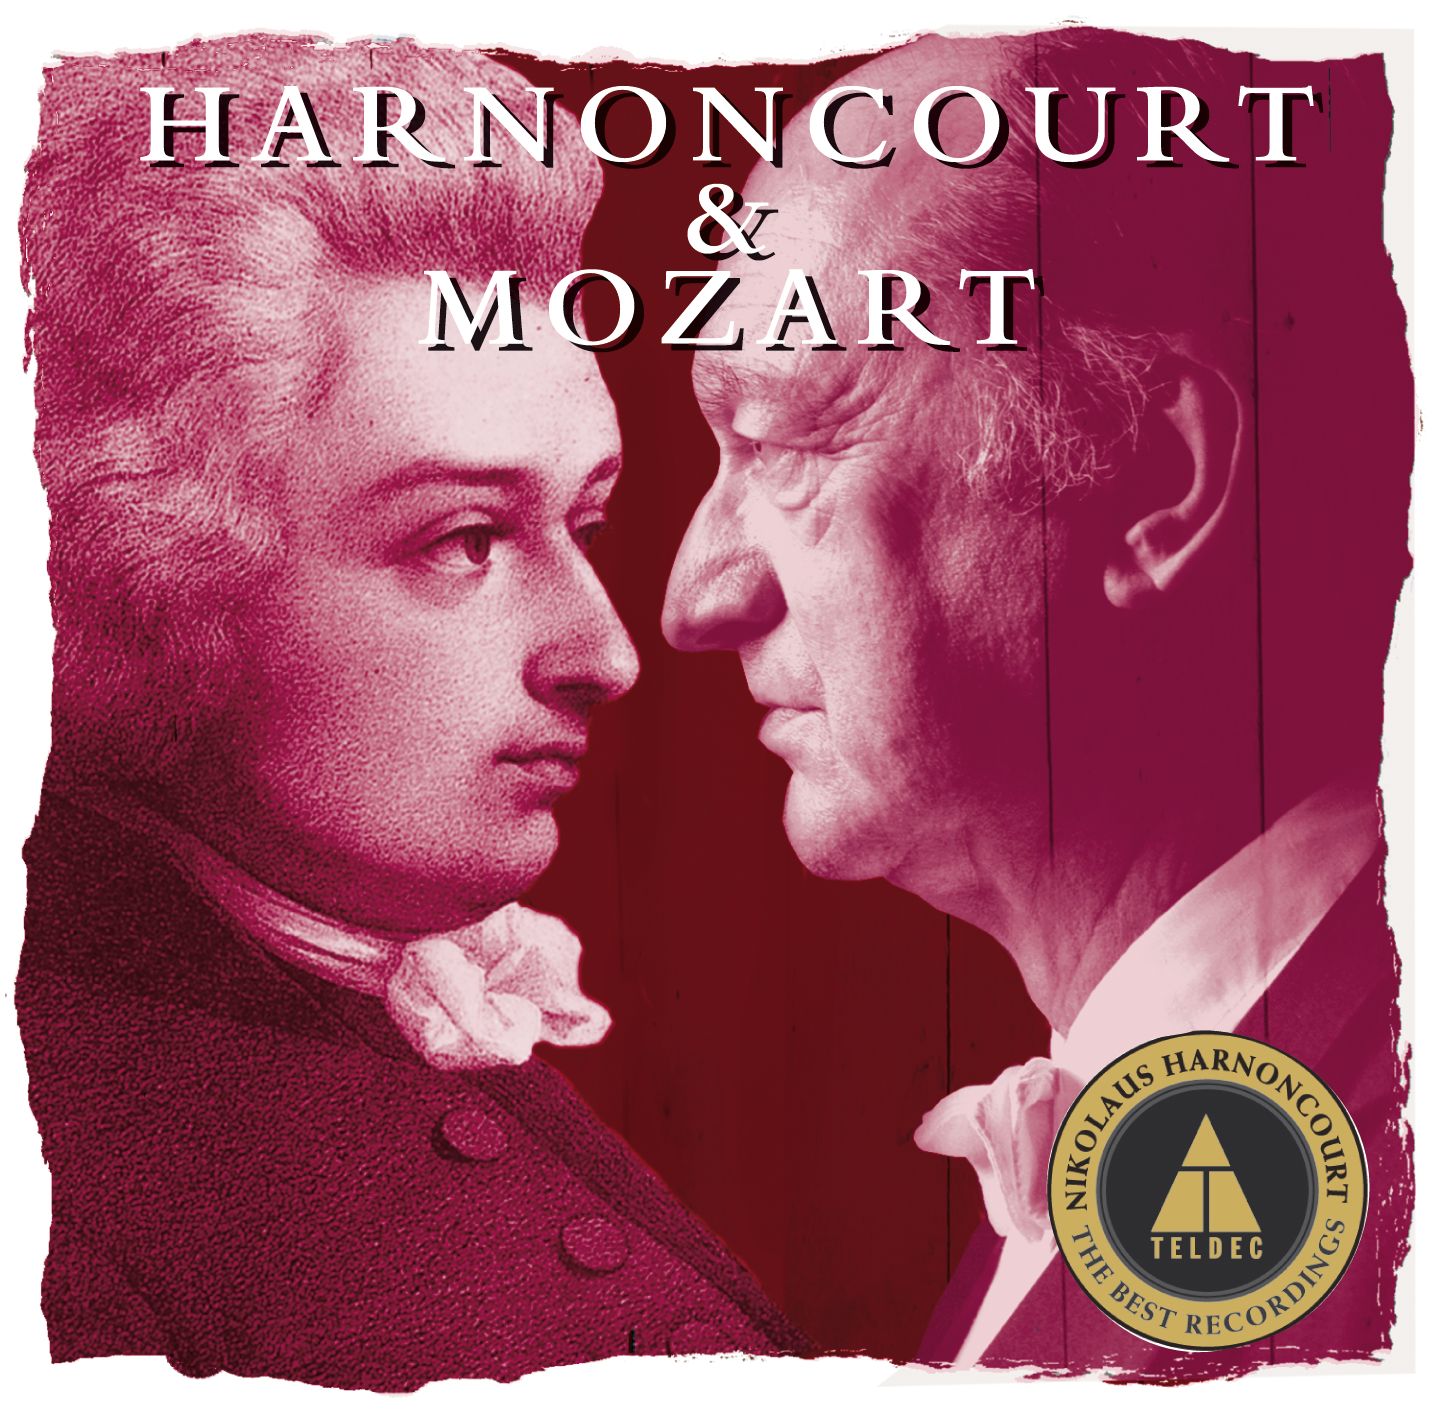 Harnoncourt conducts Mozart